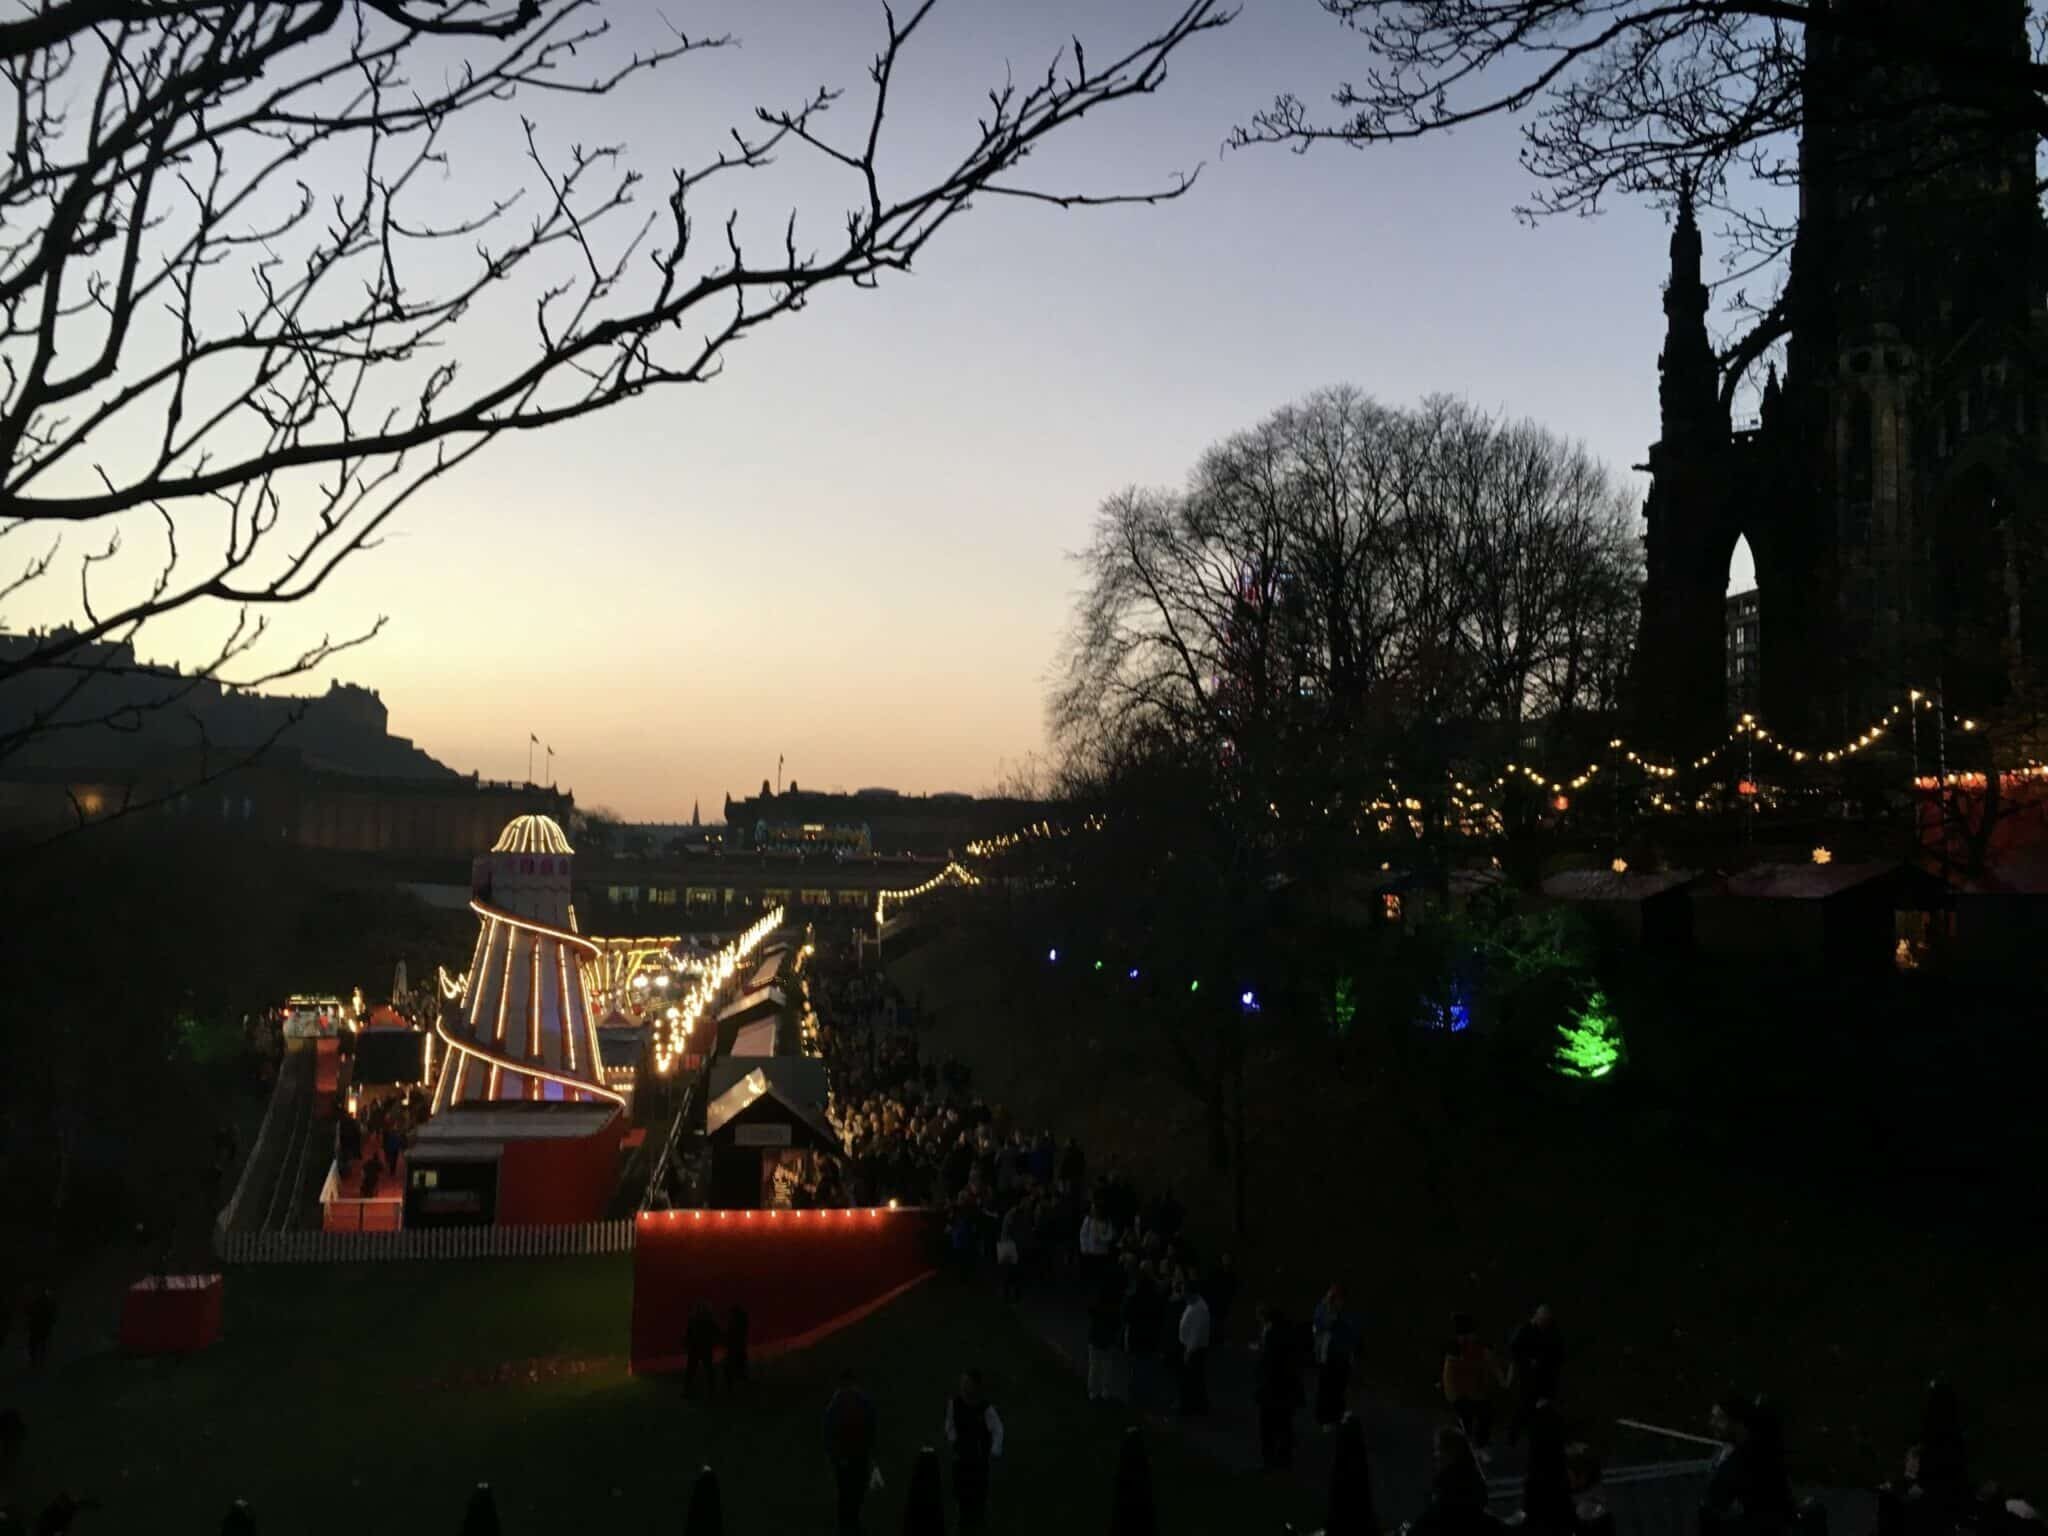 Magical Christmas time in Edinburgh